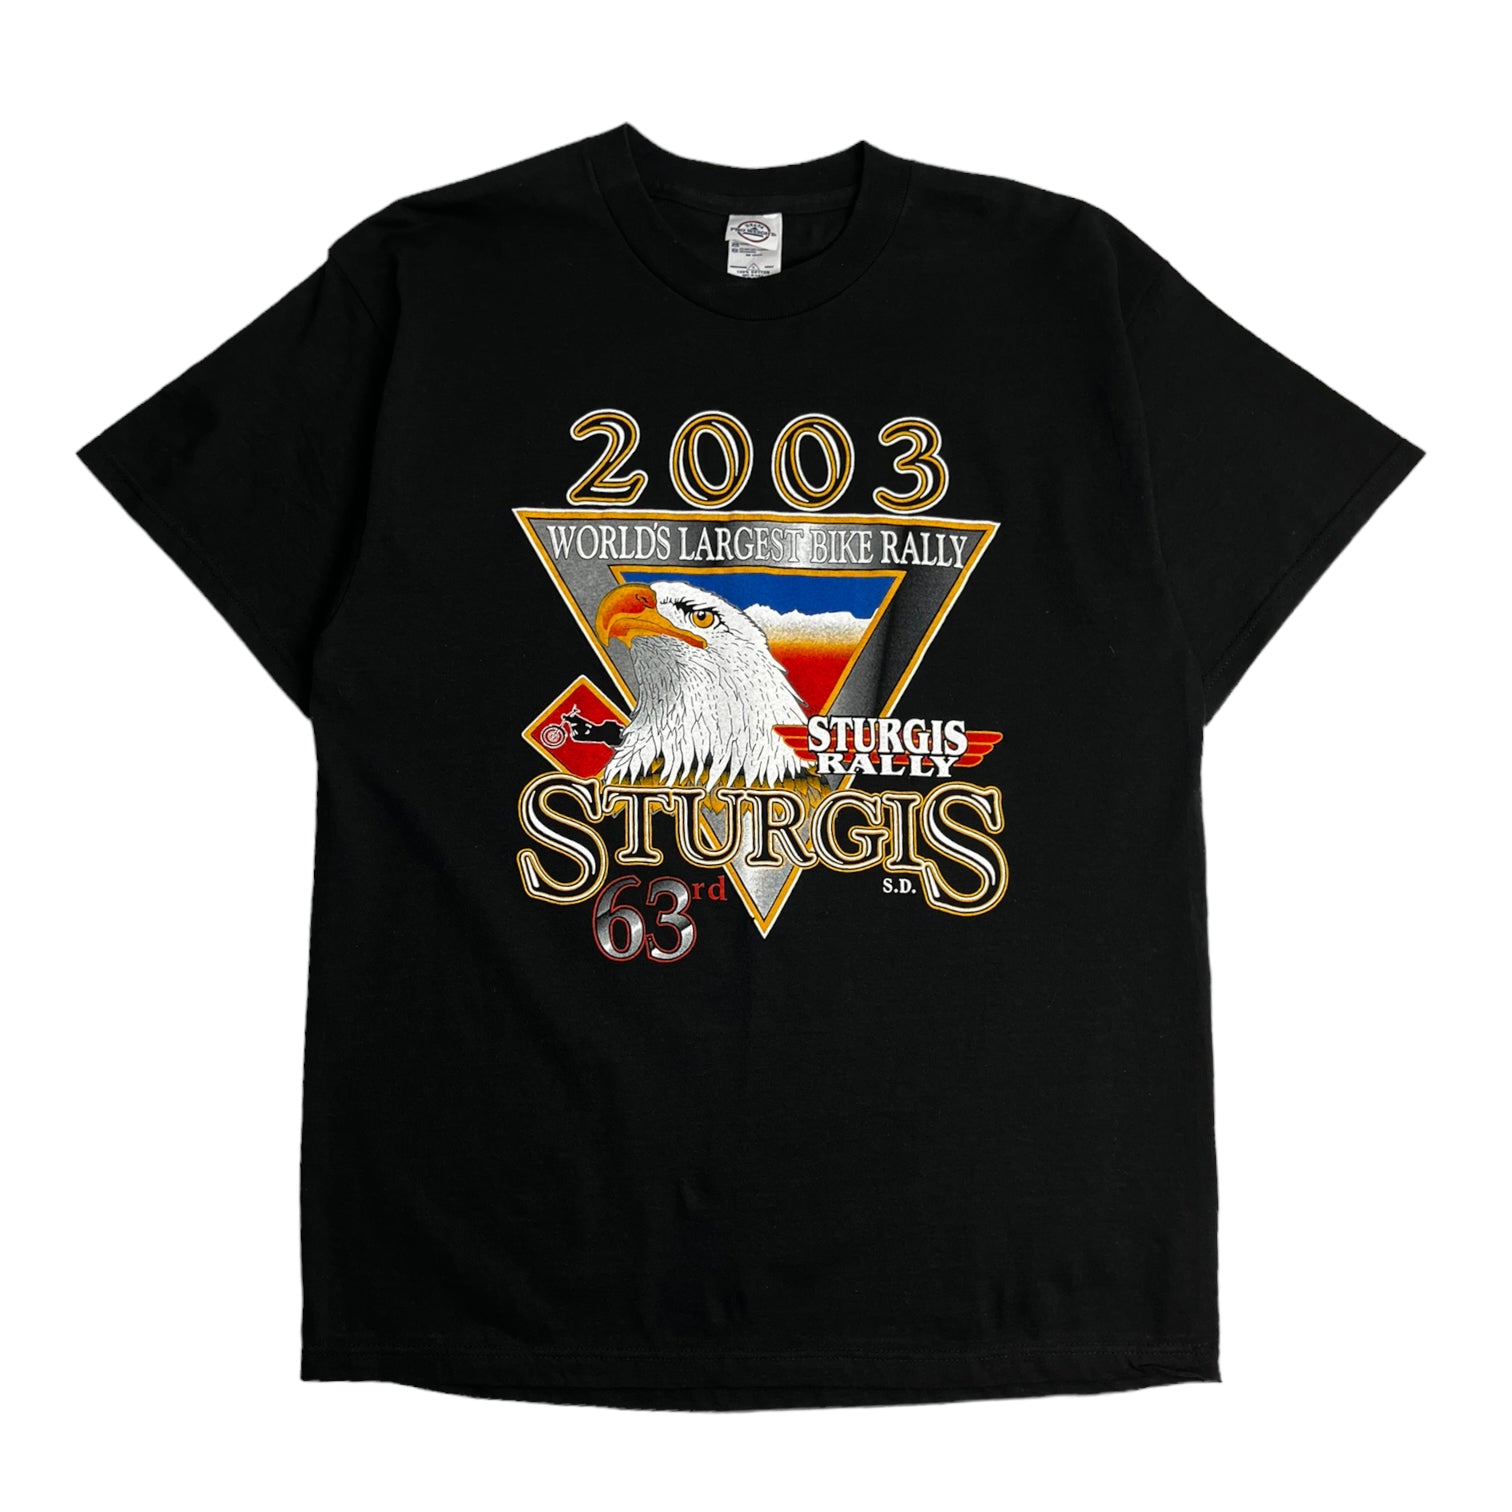 2003 Sturgis "World's Largest Bike Rally" Shirt - Black Biker Shirt